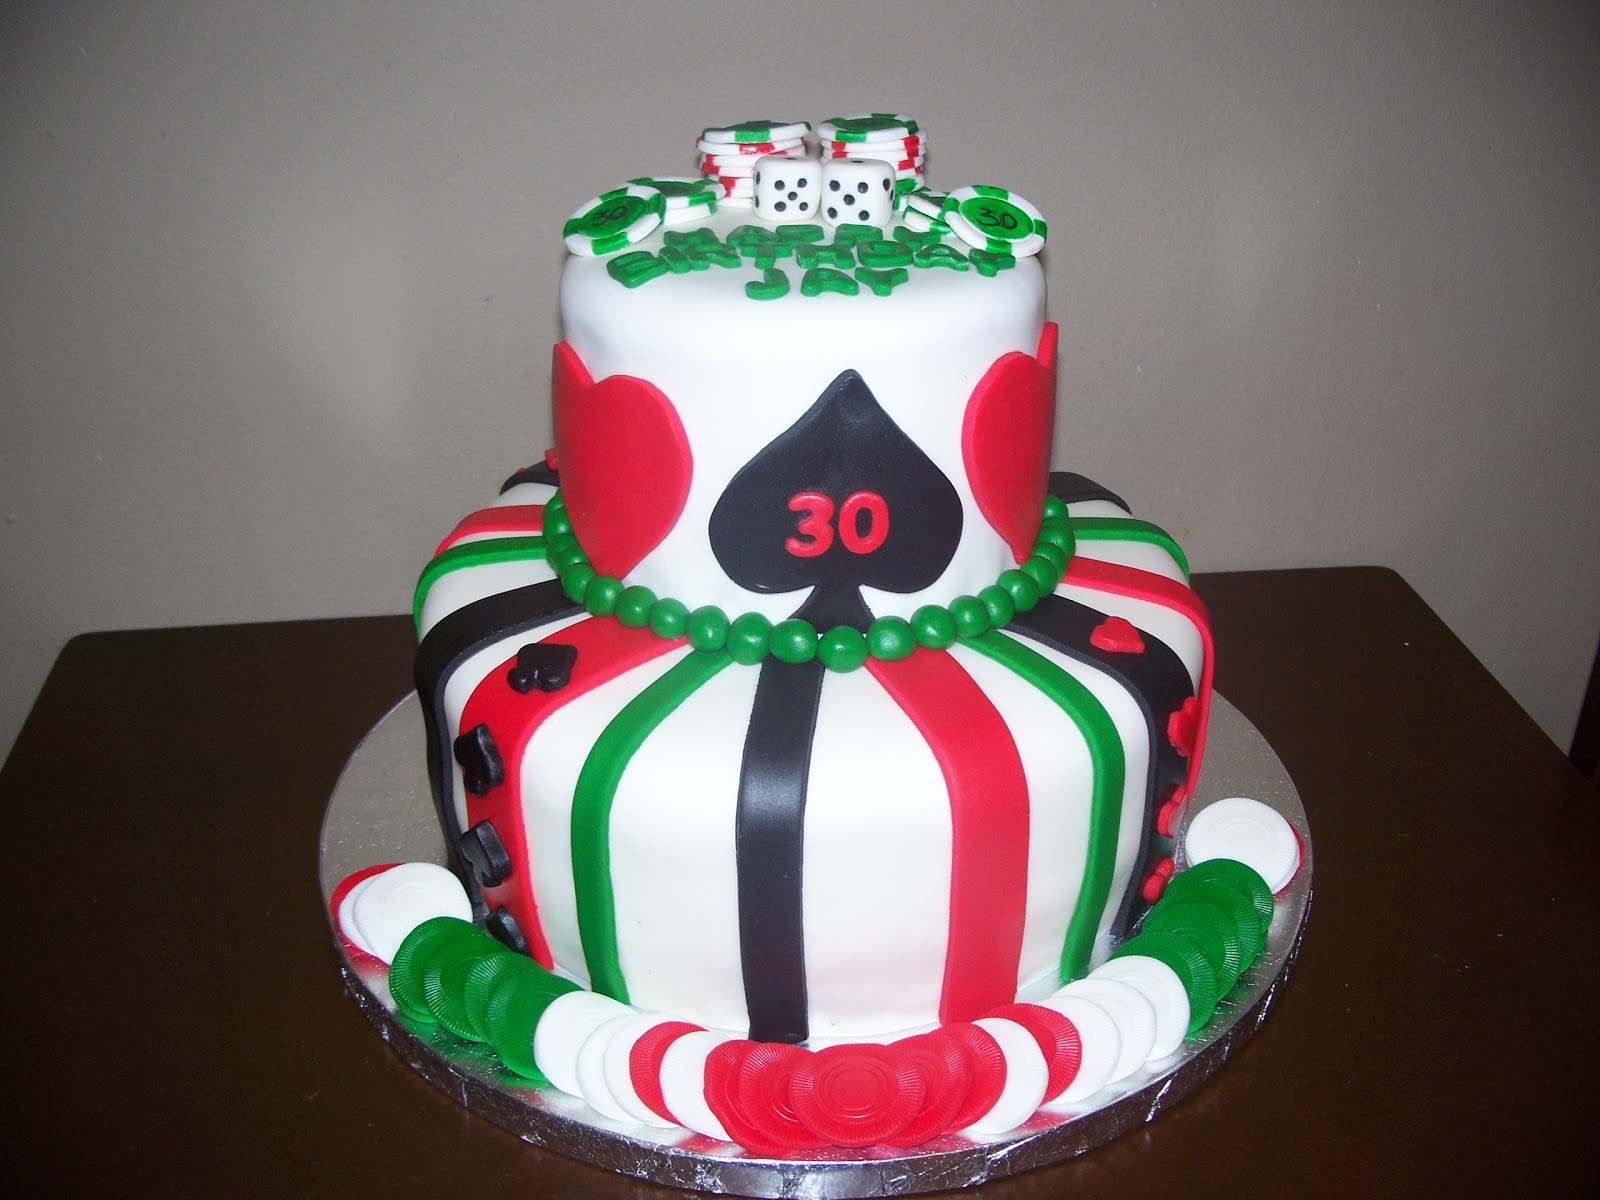 7-funny-30th-birthday-cakes-for-him-photo-birthday-cake-30th-birthday-cake-ideas-for-him-and